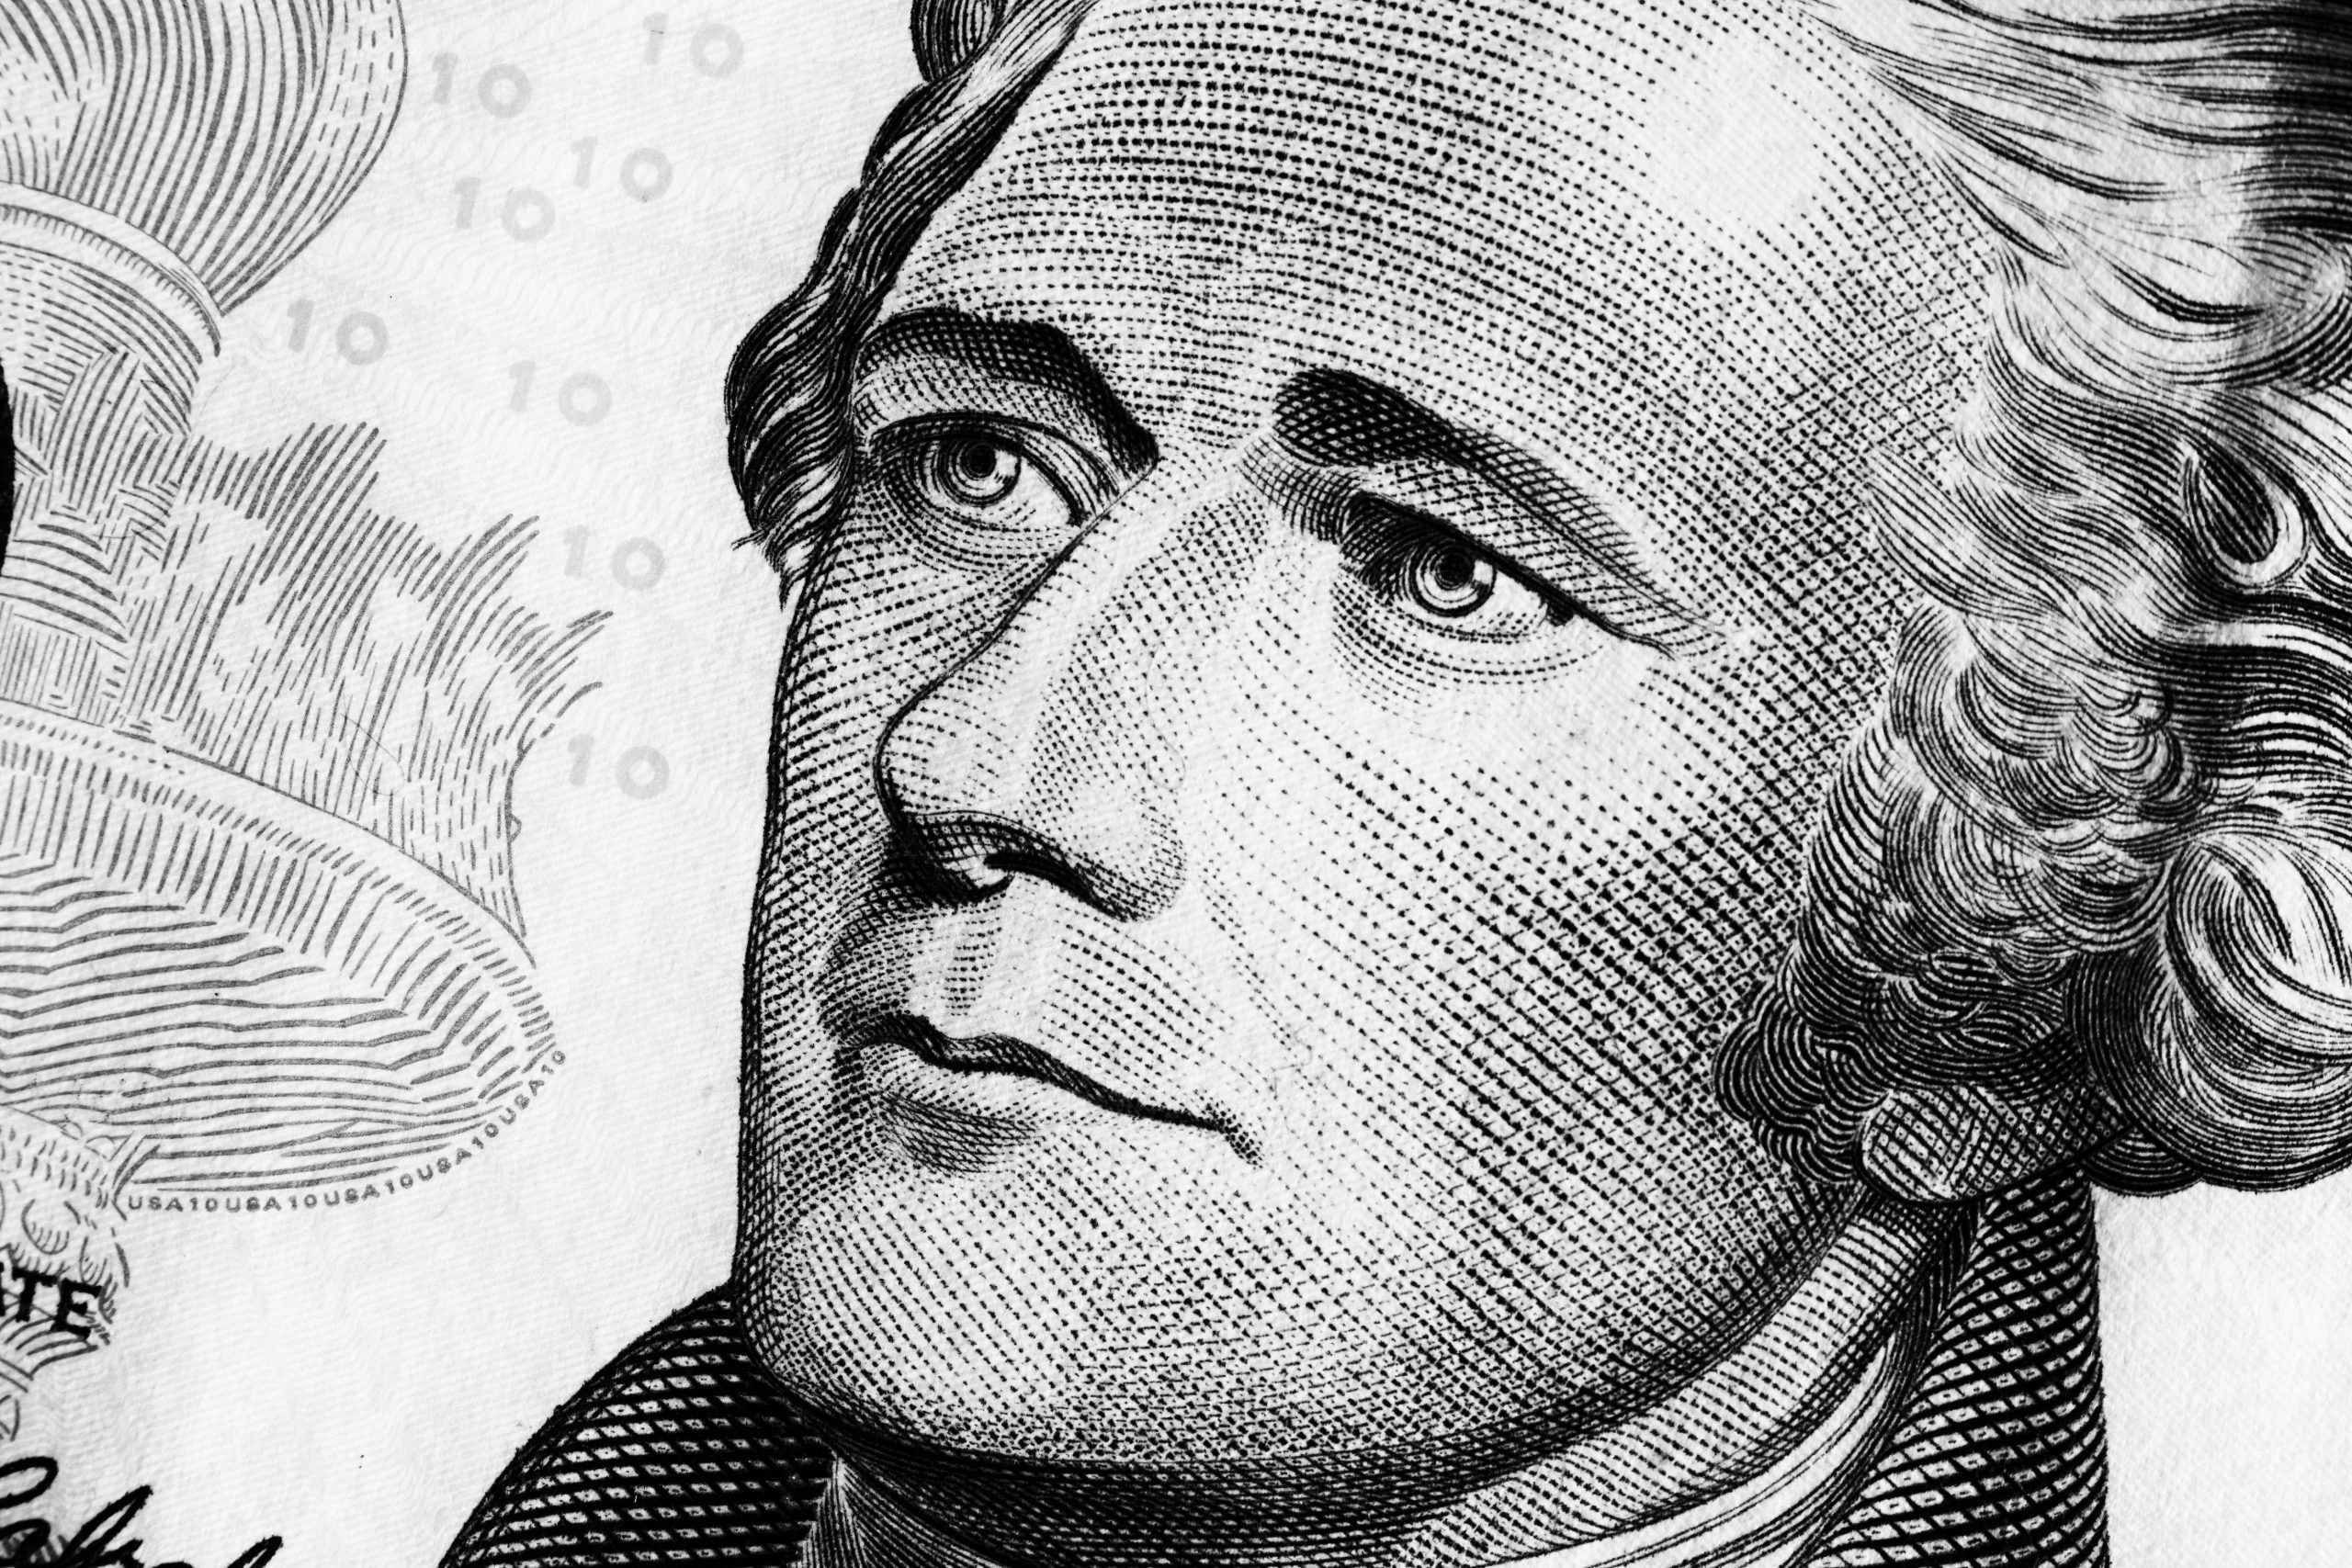 Portrait of Alexander Hamilton on the Ten dollars bill